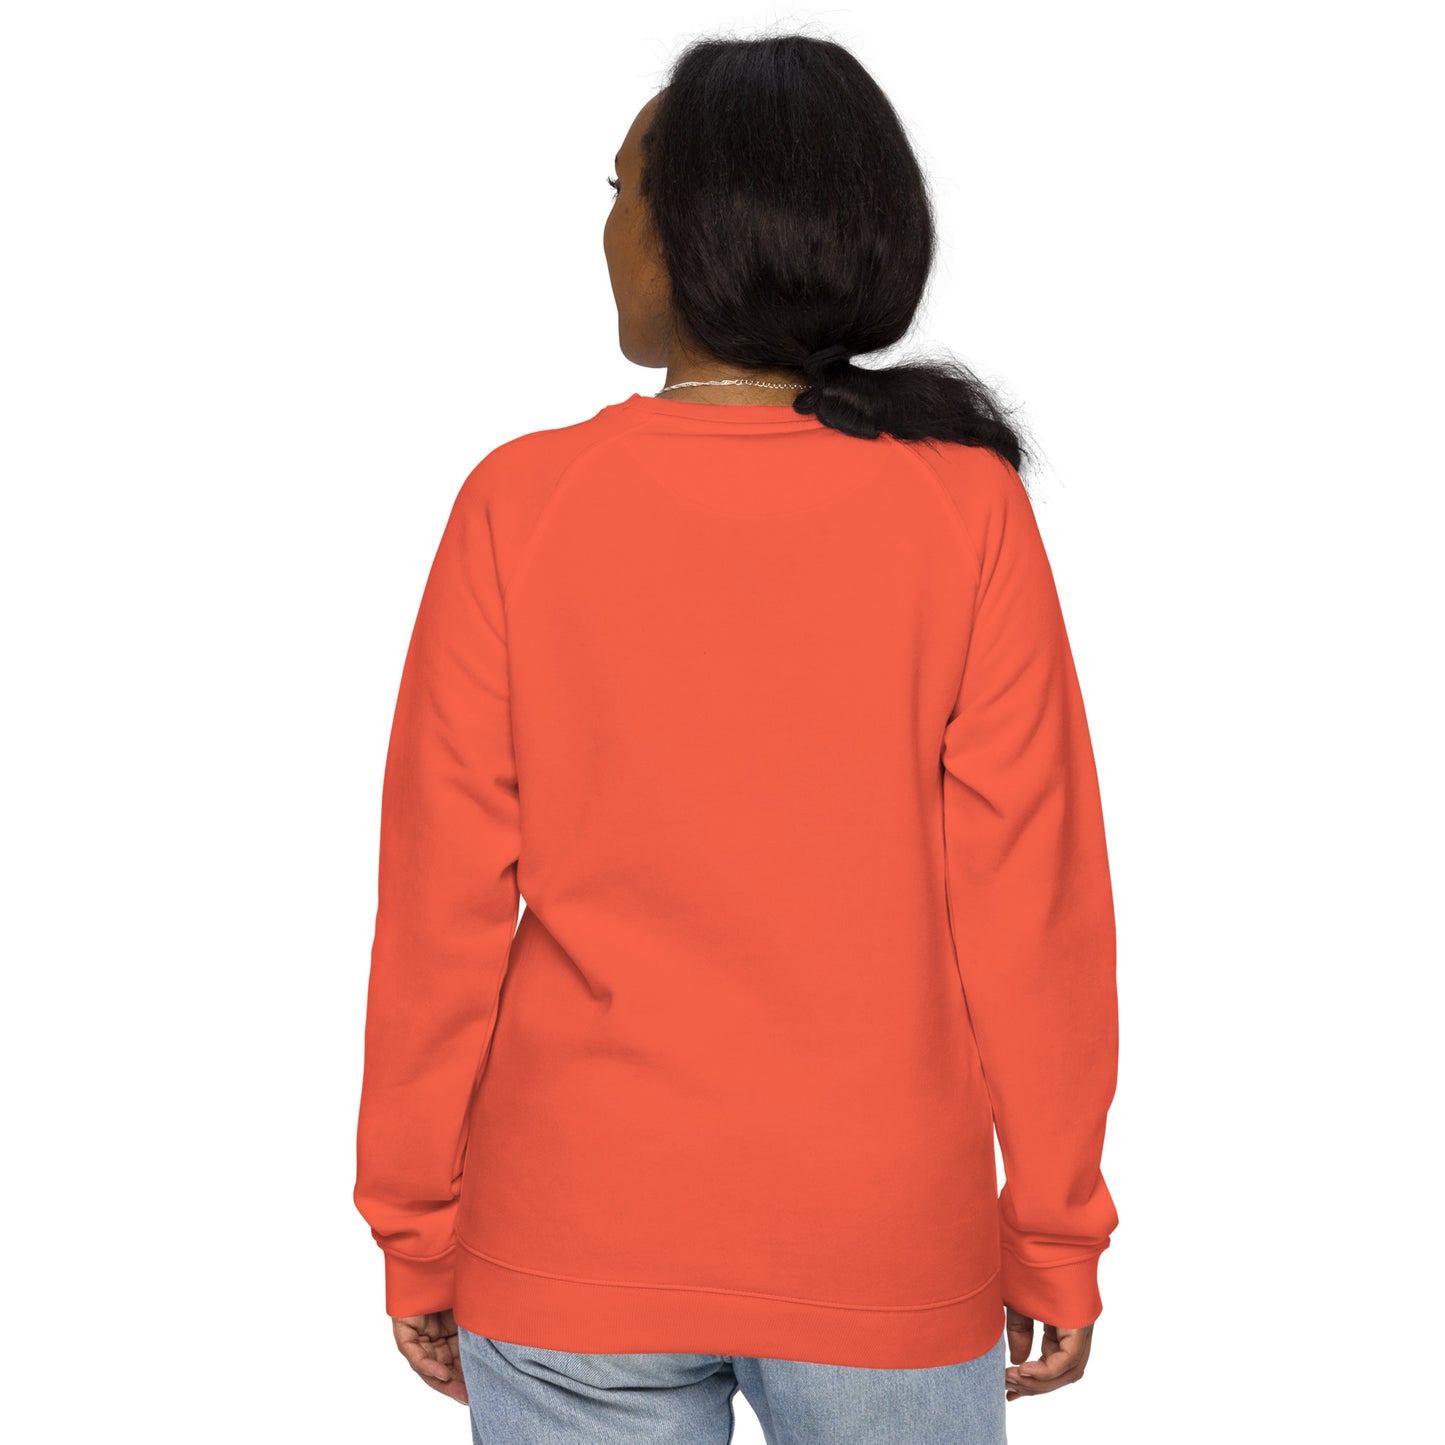 Unisex Organic Sweatshirt/Losing-Is-Not-An-Option